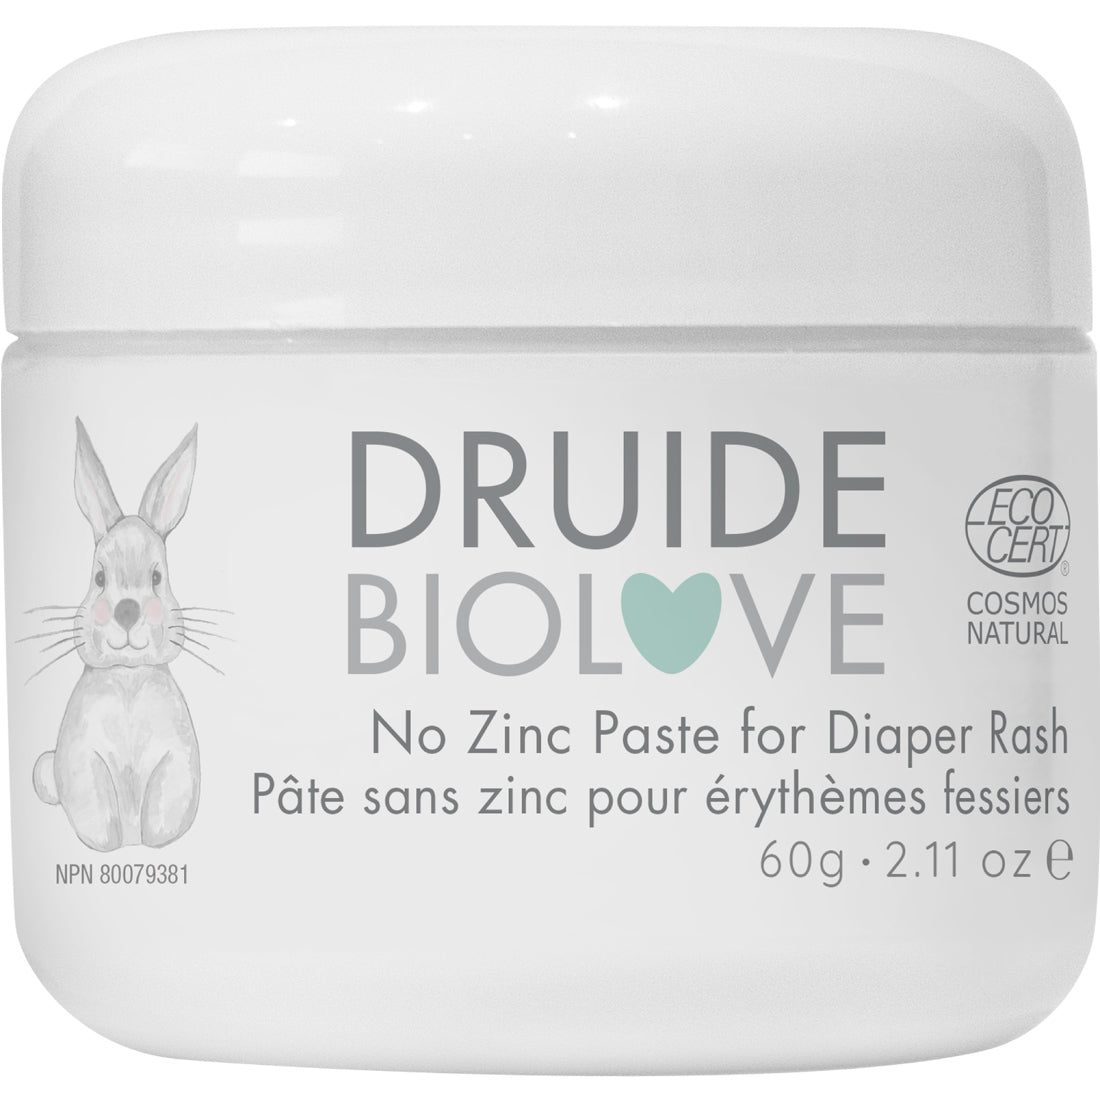 Druide Baby No Zinc Paste Diaper Rash, 60g